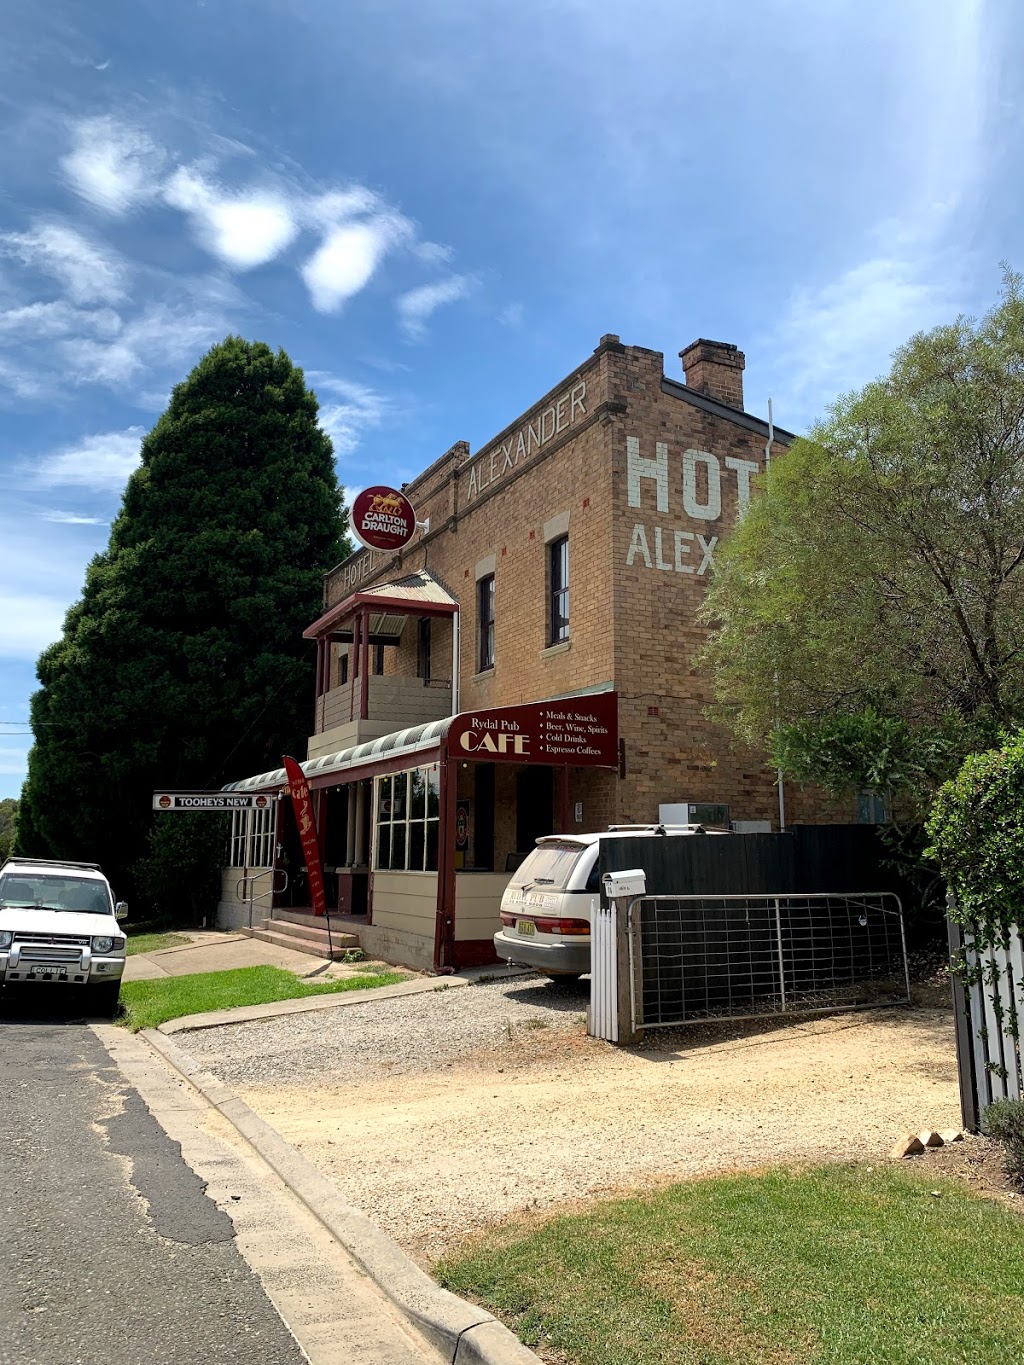 The Alexander Hotel (Rydal Pub) | lodging | LOT A Bathurst St, Rydal NSW 2790, Australia | 0263556208 OR +61 2 6355 6208